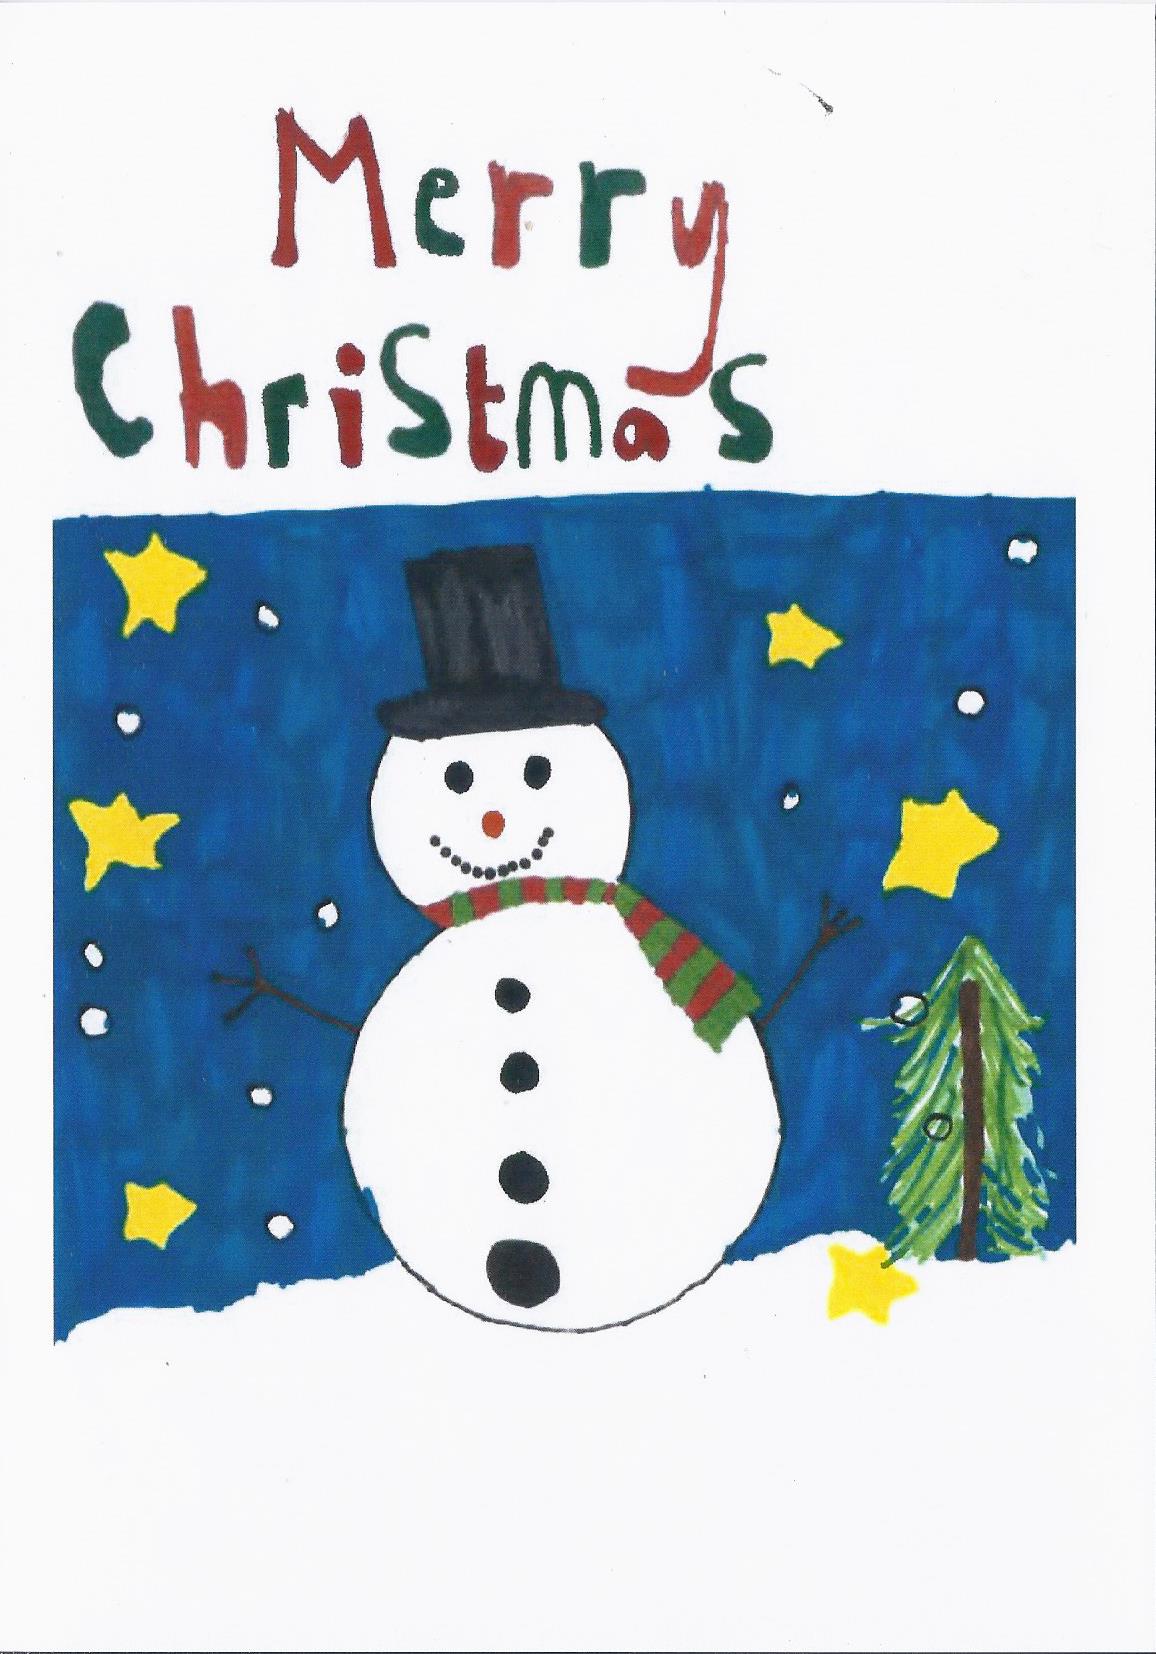 Emily Nelson's Christmas Card